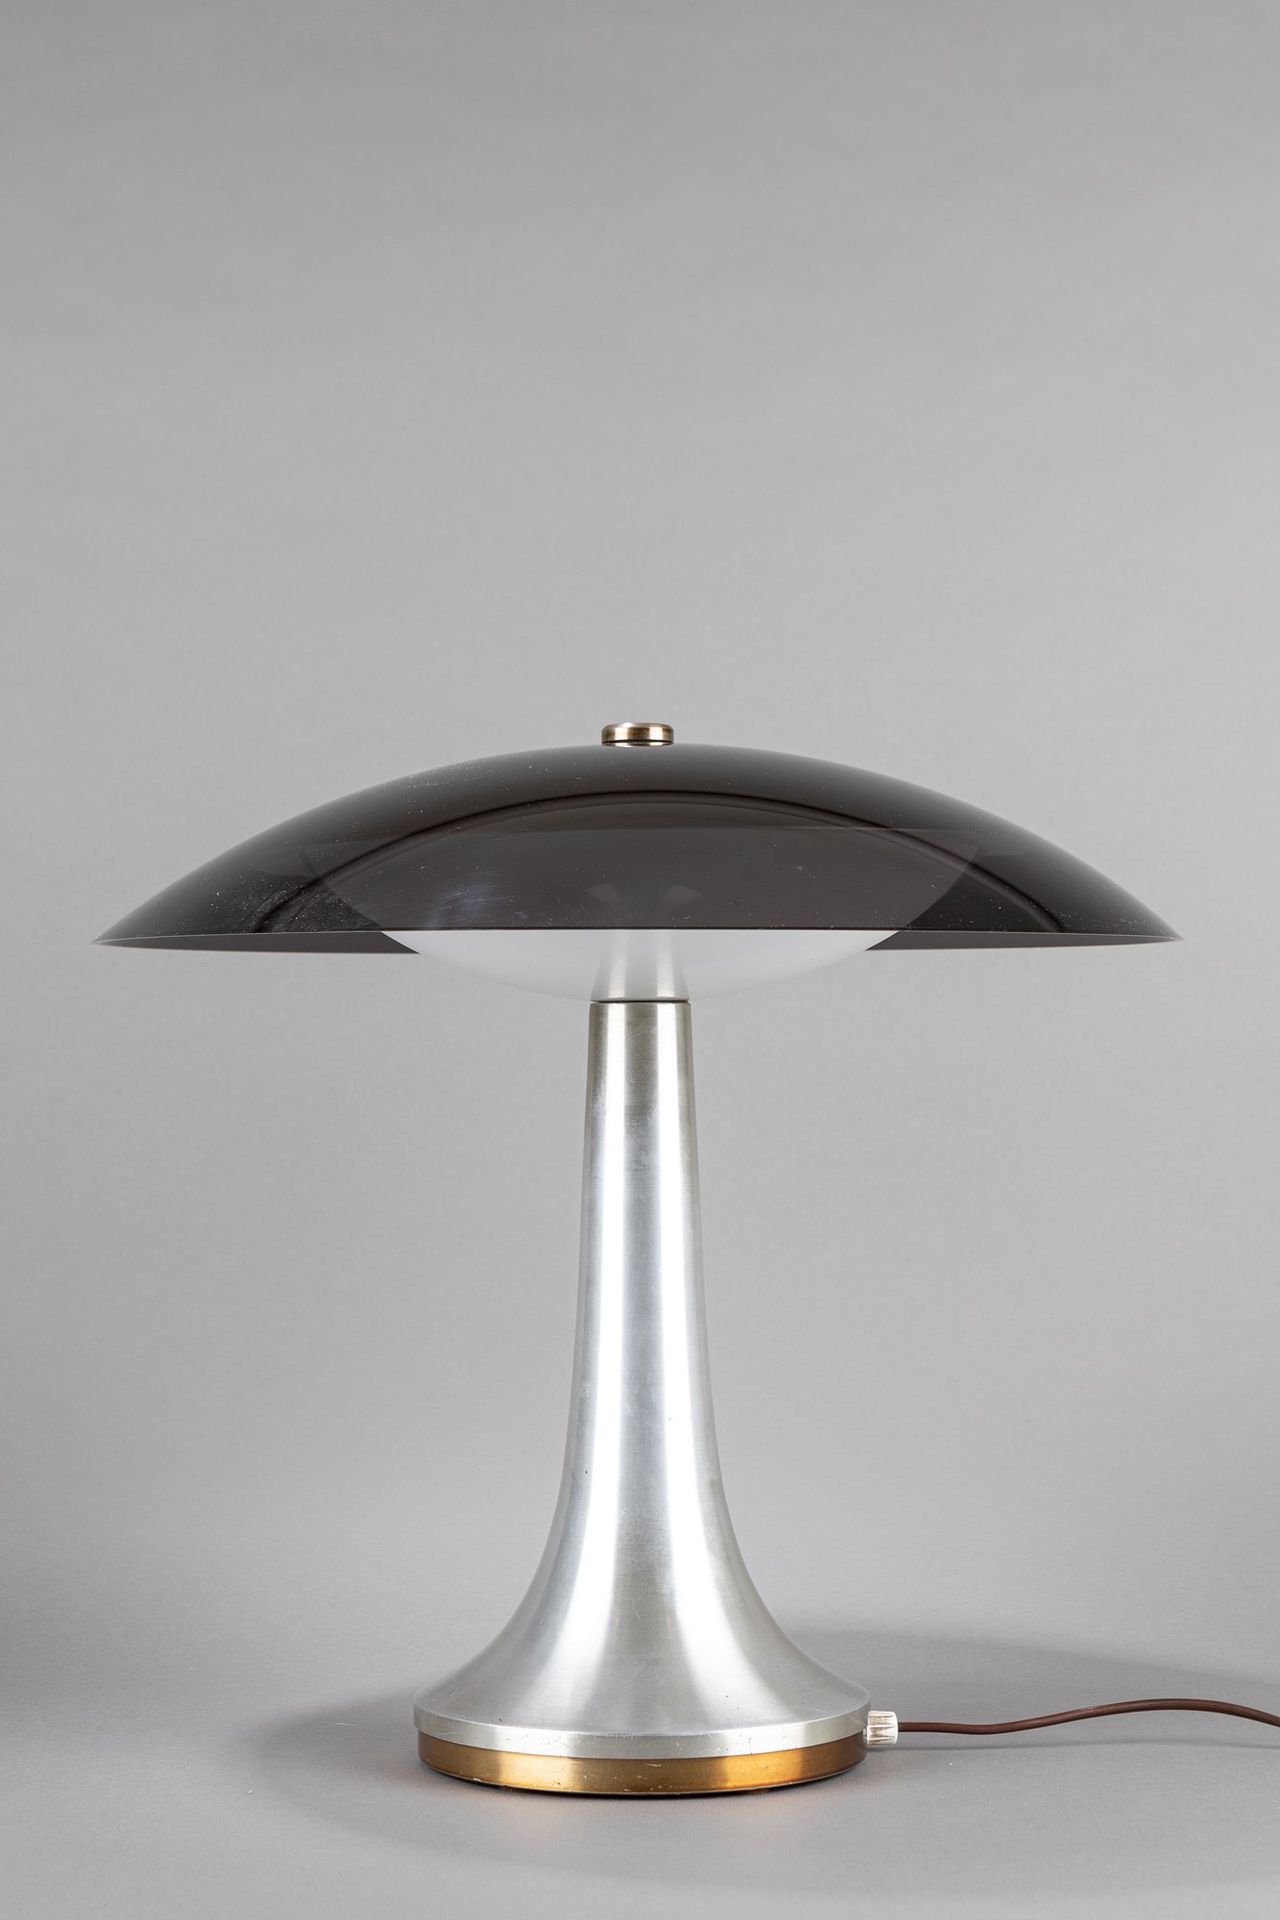 Stilux 台灯，1960年左右

h 45 cm
拉丝镀镍黄铜，铝，透明玻璃。